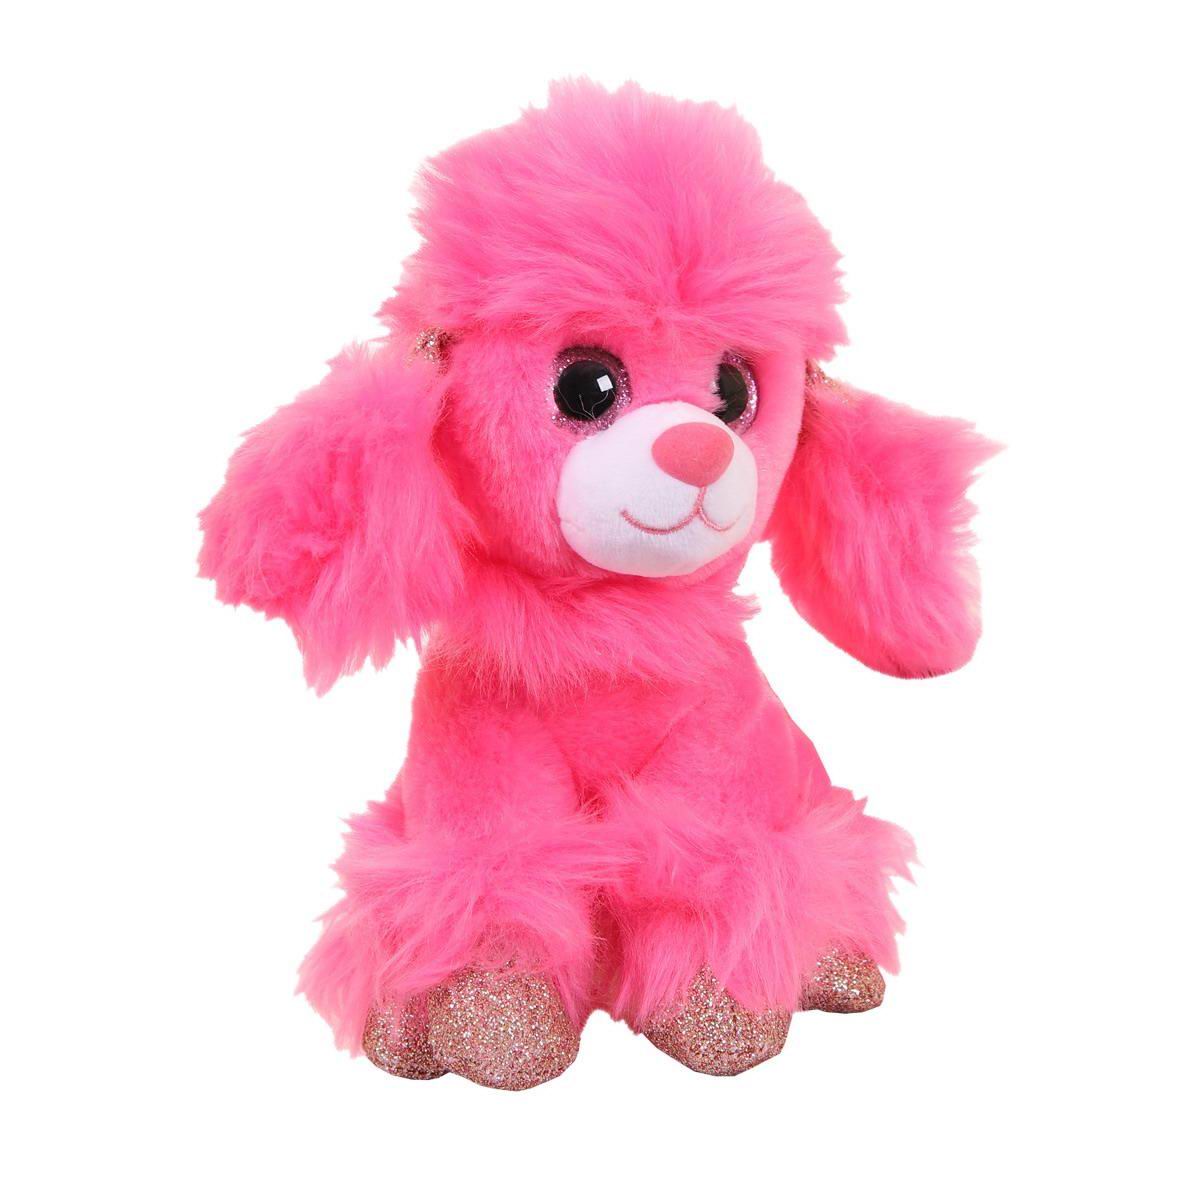 фото Мягкая игрушка собачка карамелька, ярко-розовая 14 см junfa toys ltd.